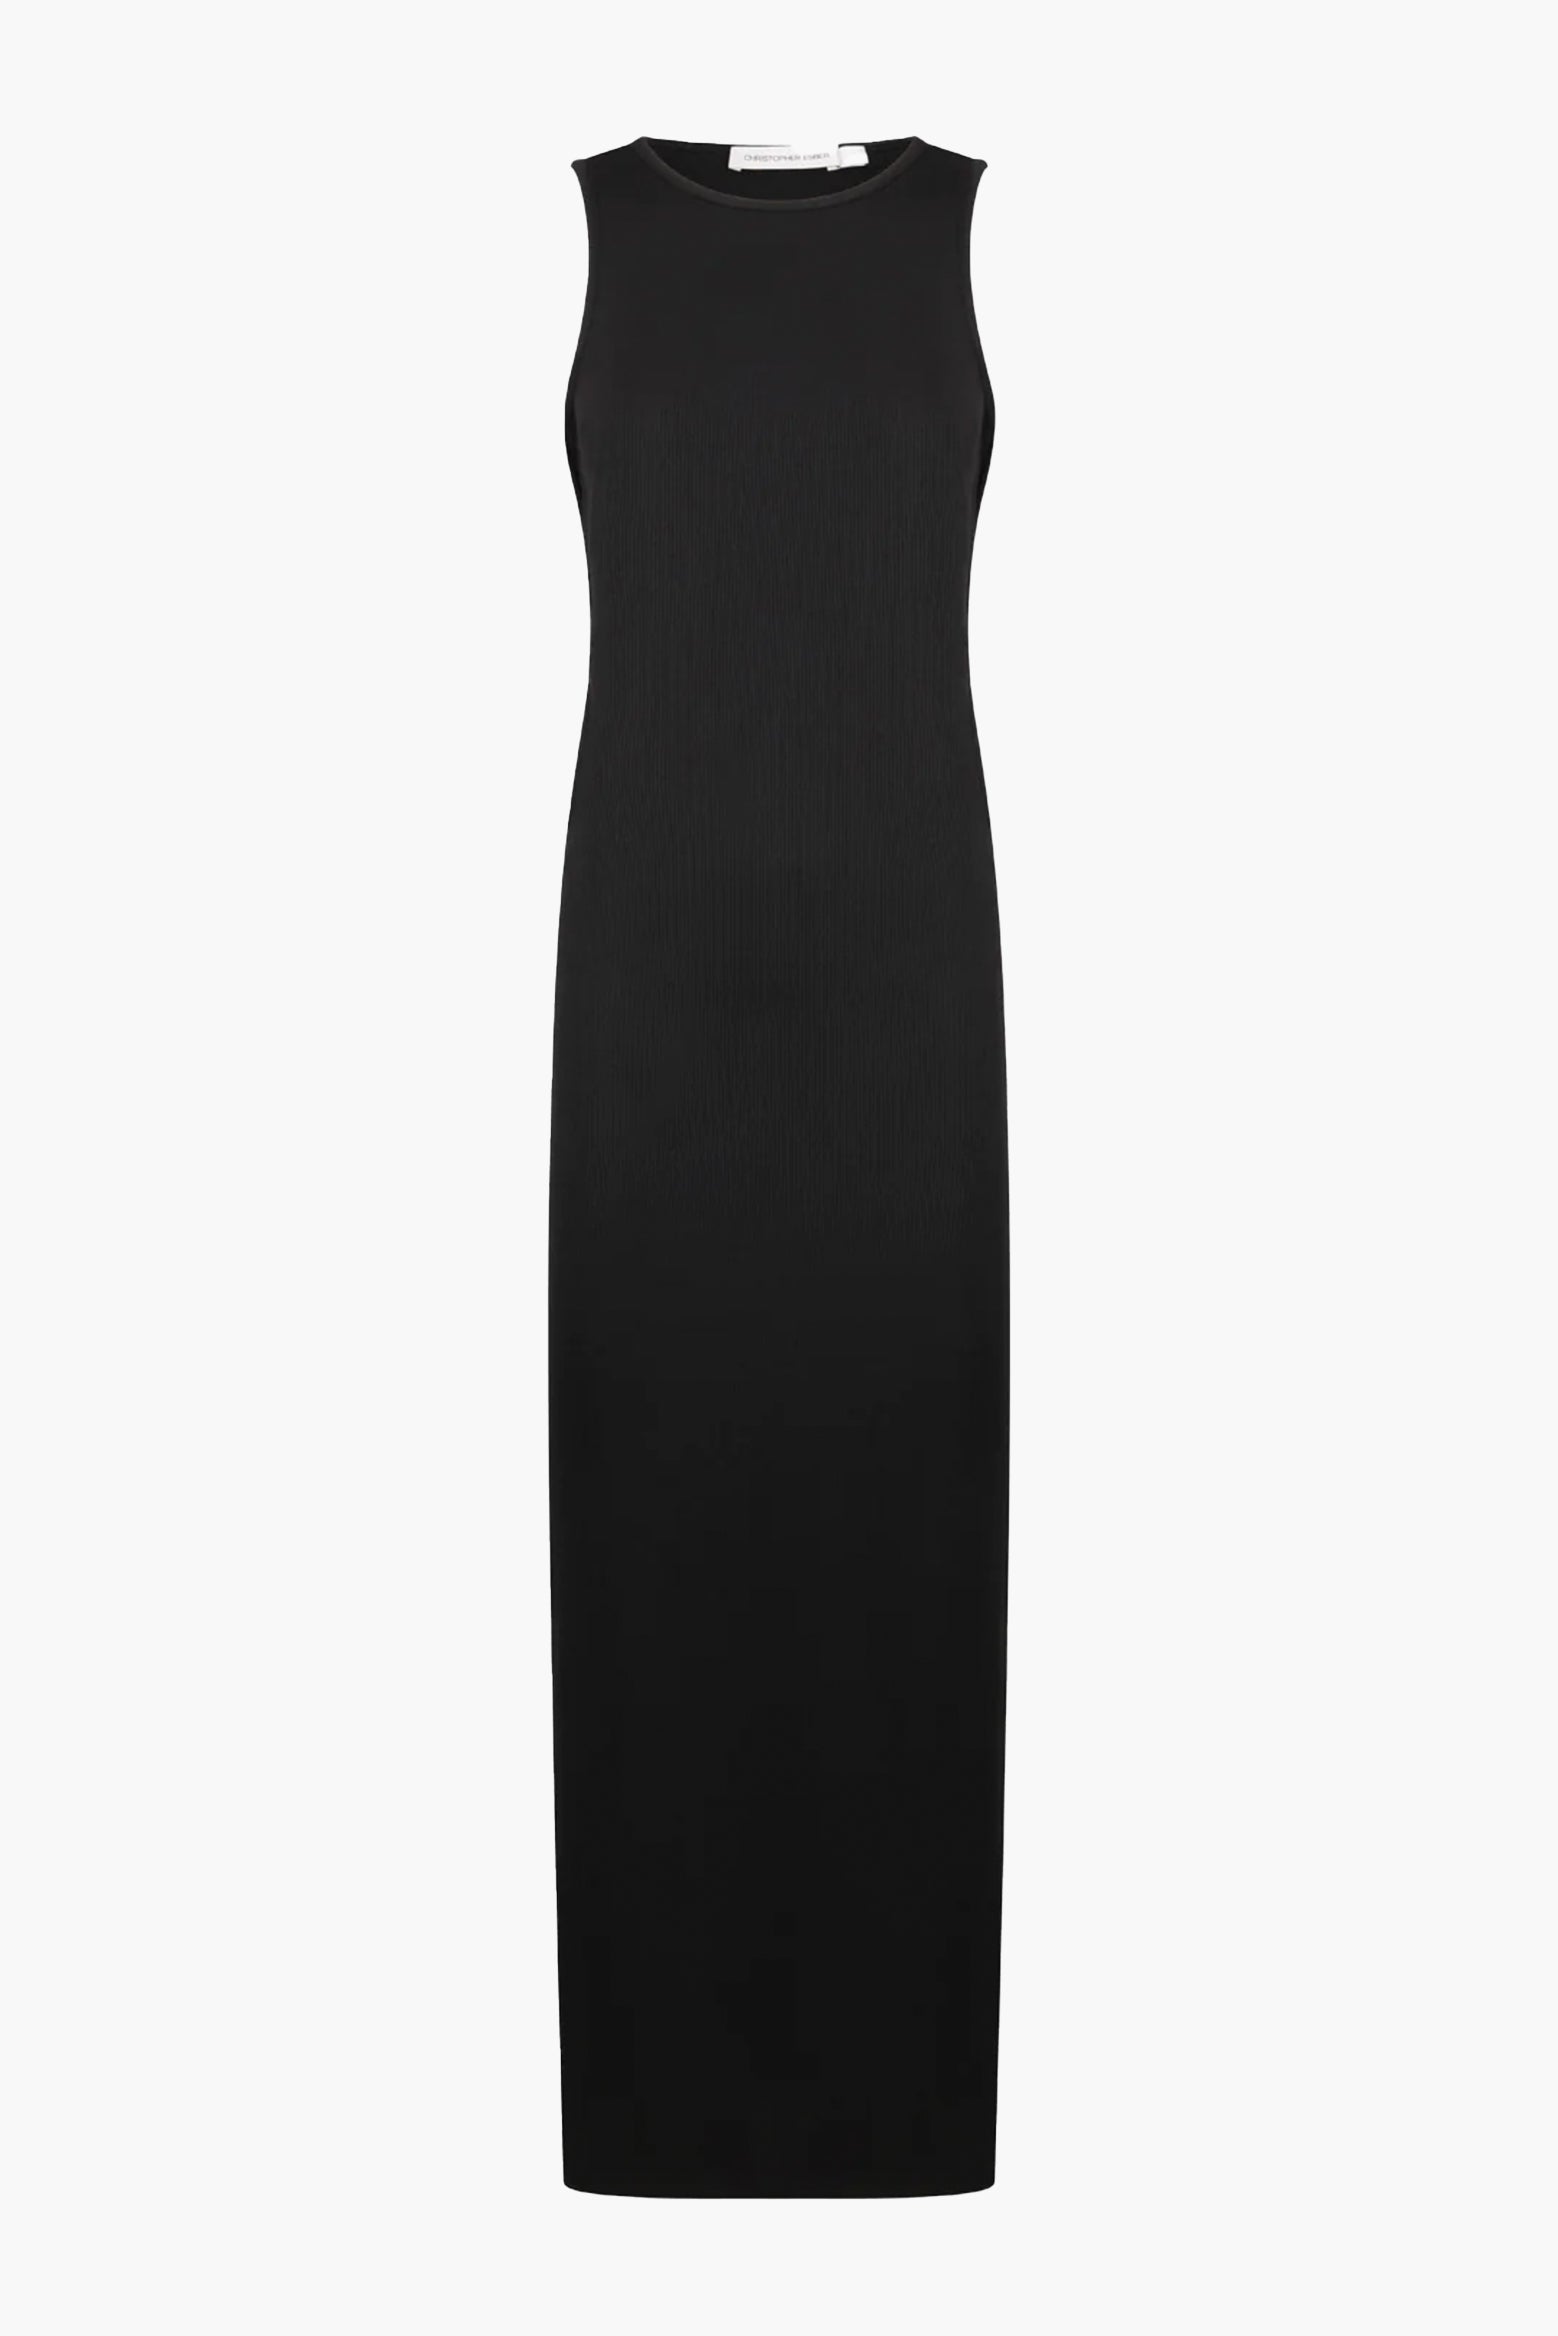 Christopher Esber Oblix Twist Halter Dress in Black available at The New Trend Australia.